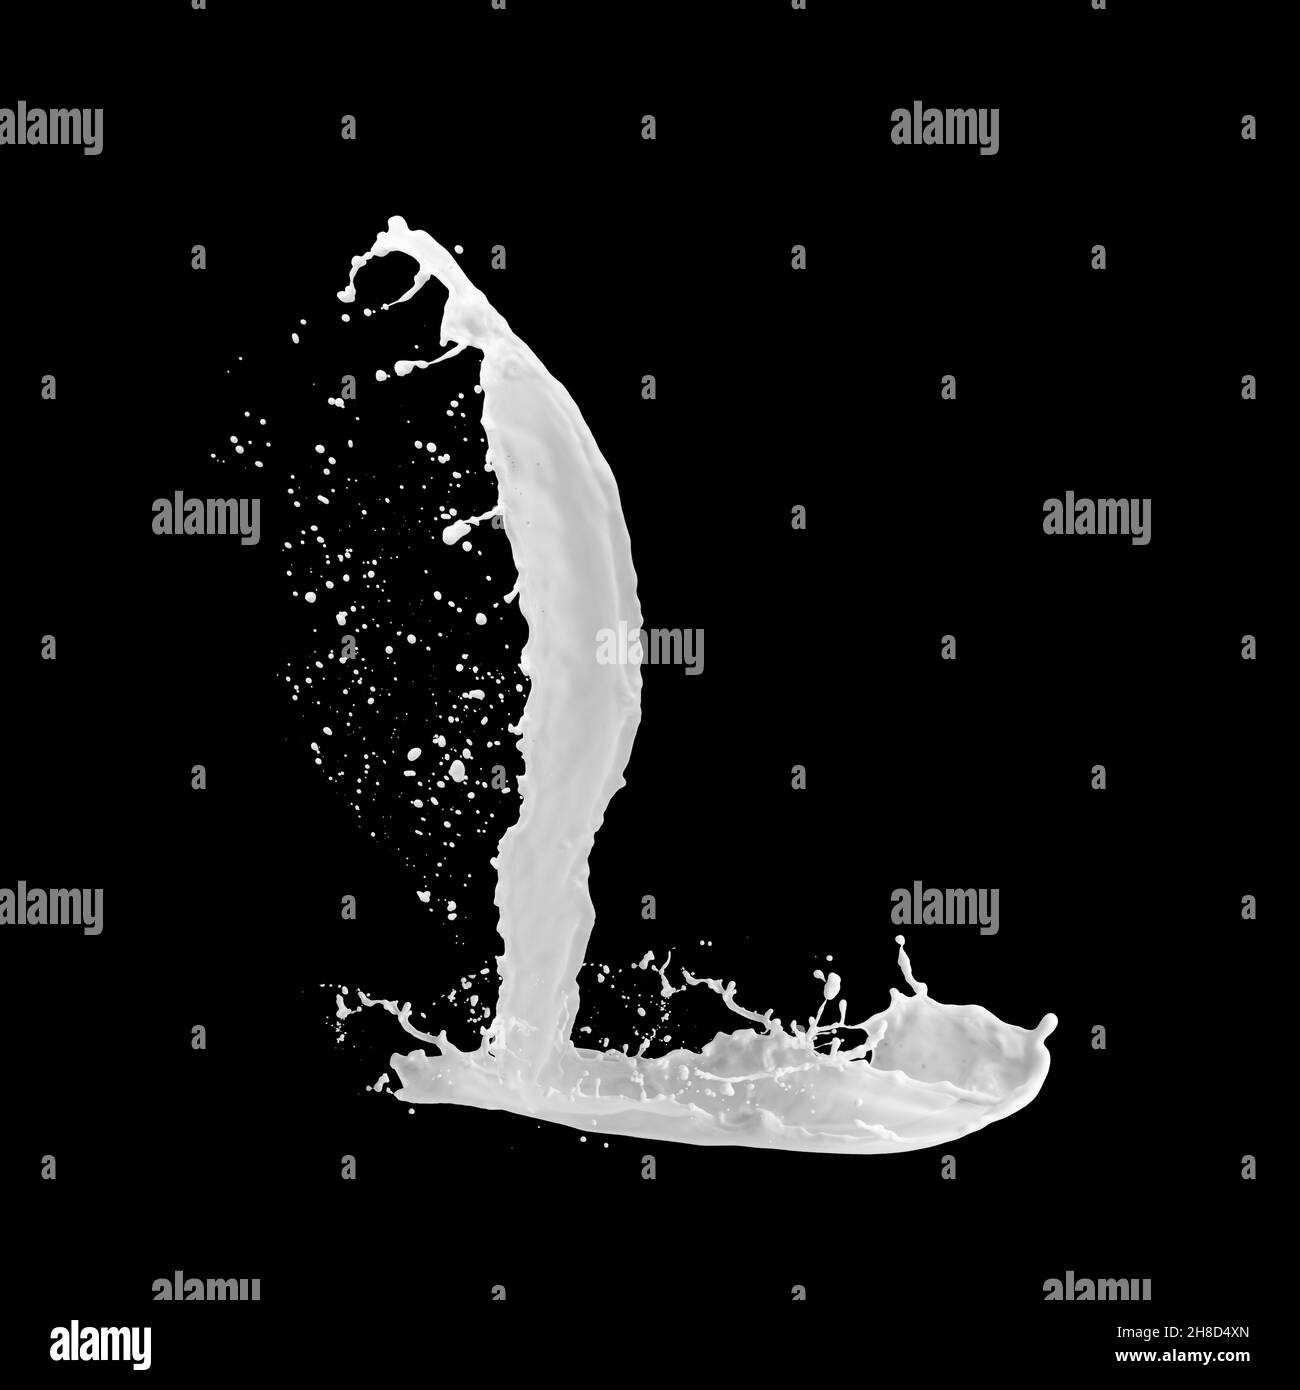 Letter L made of milk splash, isolated on black background Stock Photo